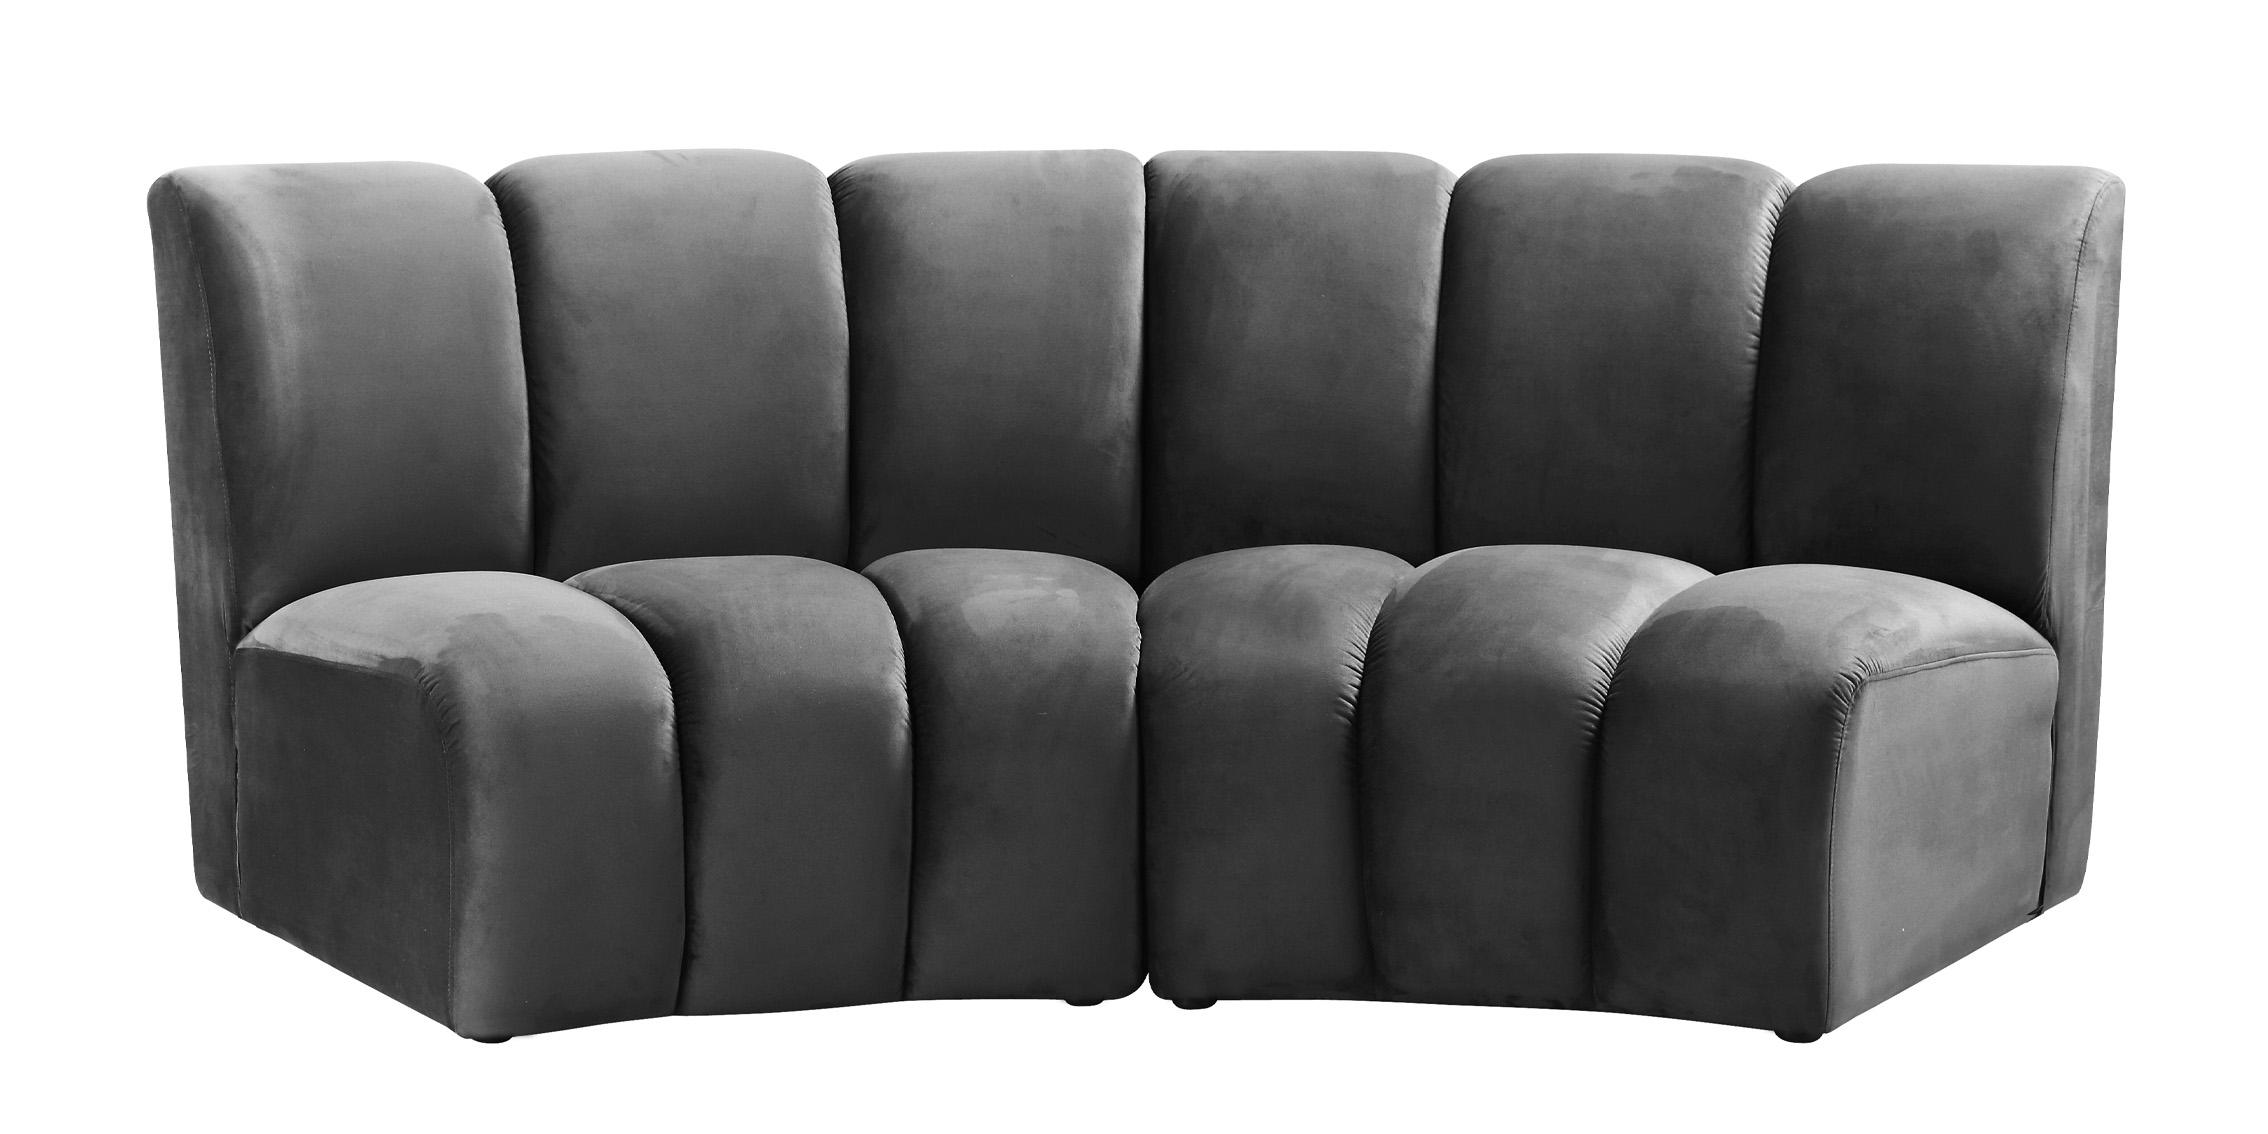 Contemporary, Modern Modular Sectional Sofa INFINITY 638Grey-2PC 638Grey-2PC in Gray Velvet